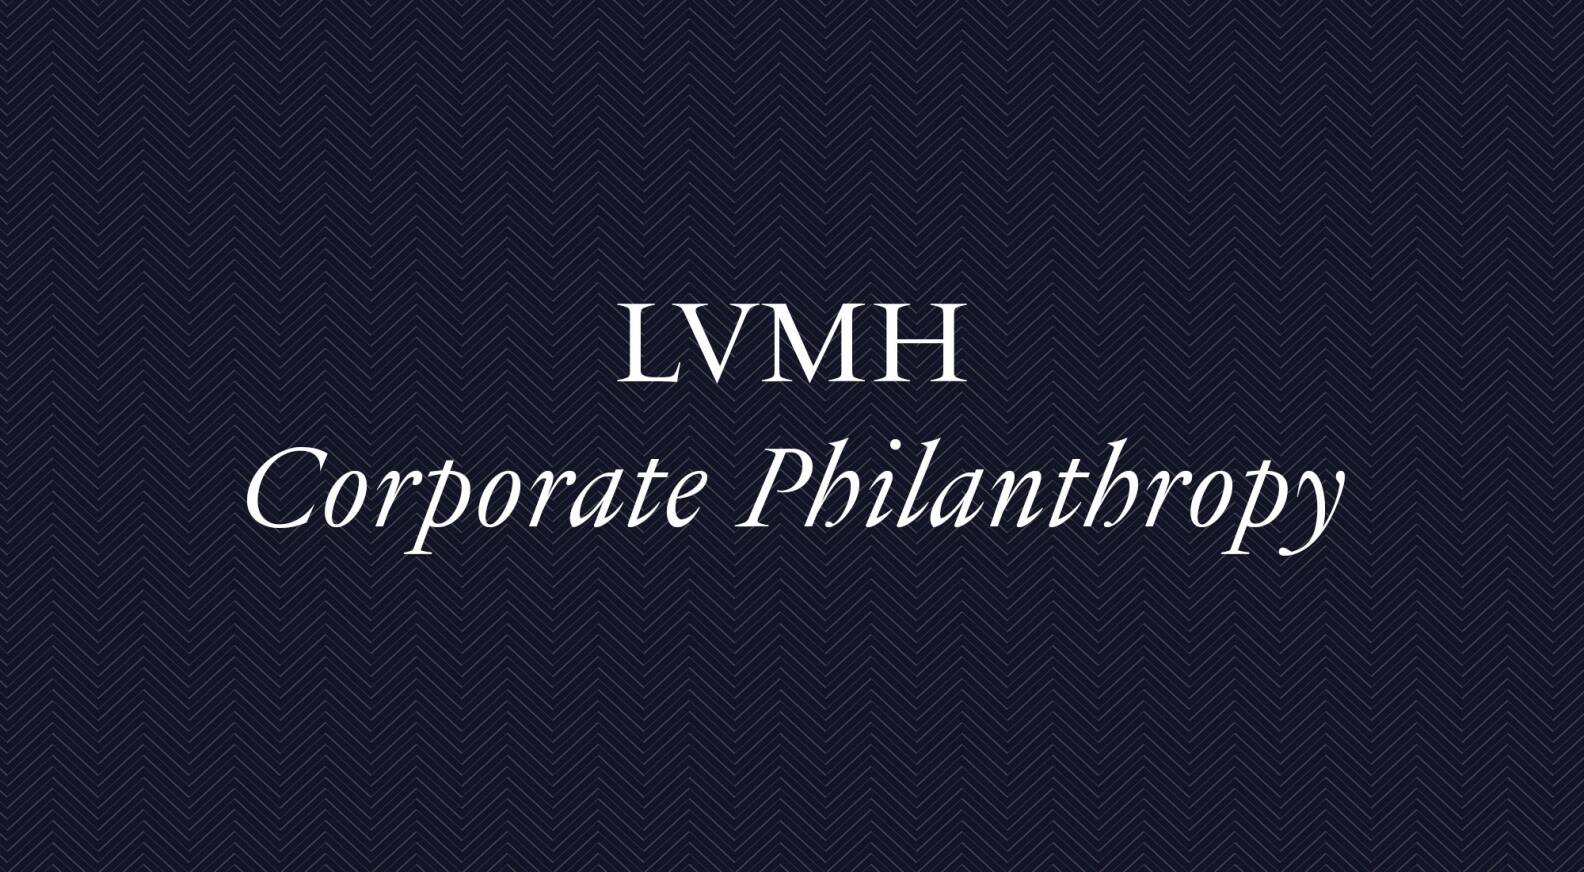 LVMH Mission, Vision & Values